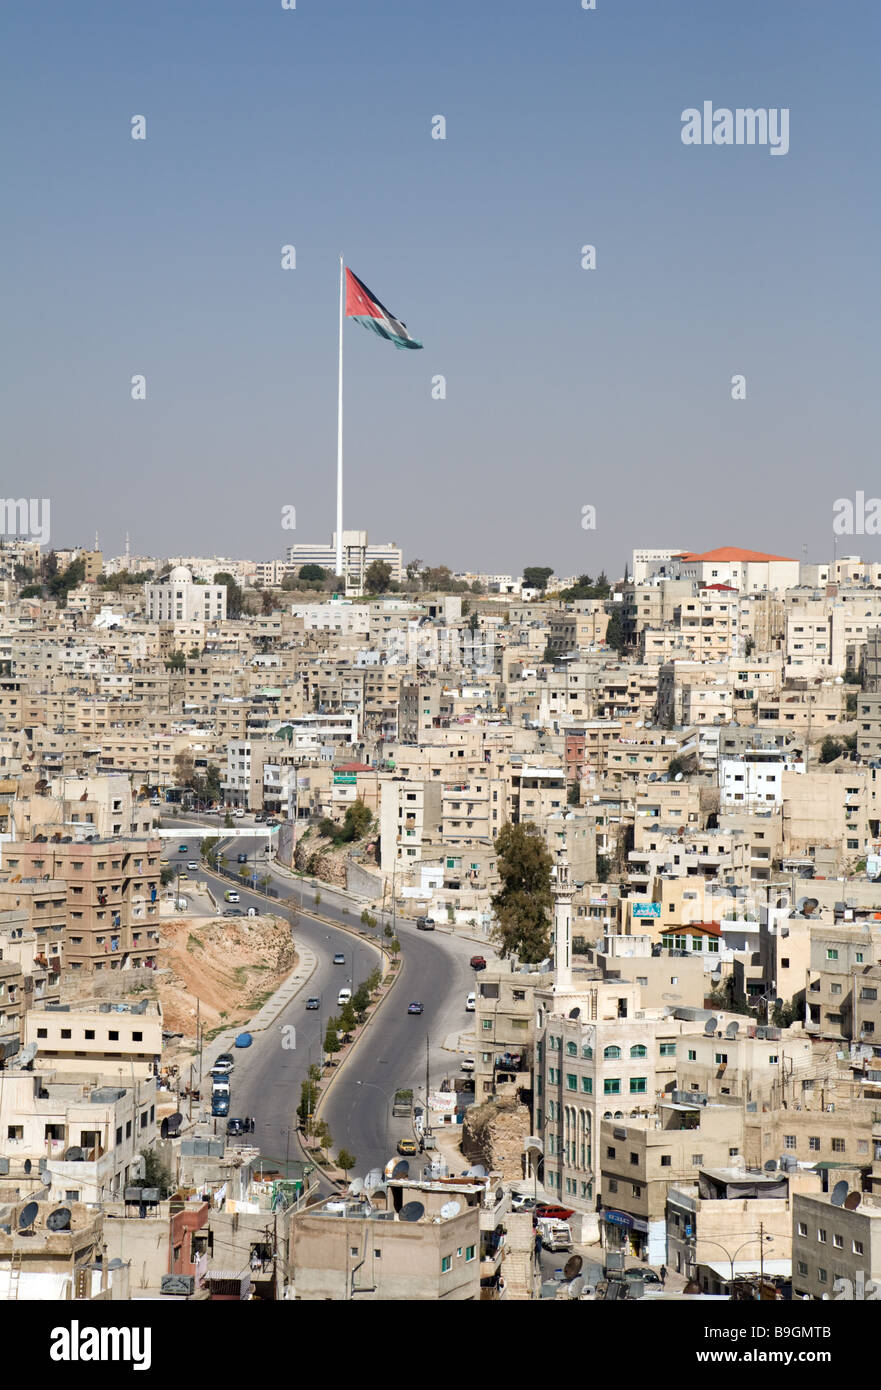 The city of Amman with the Jordanian flag flying; Jordan Stock Photo